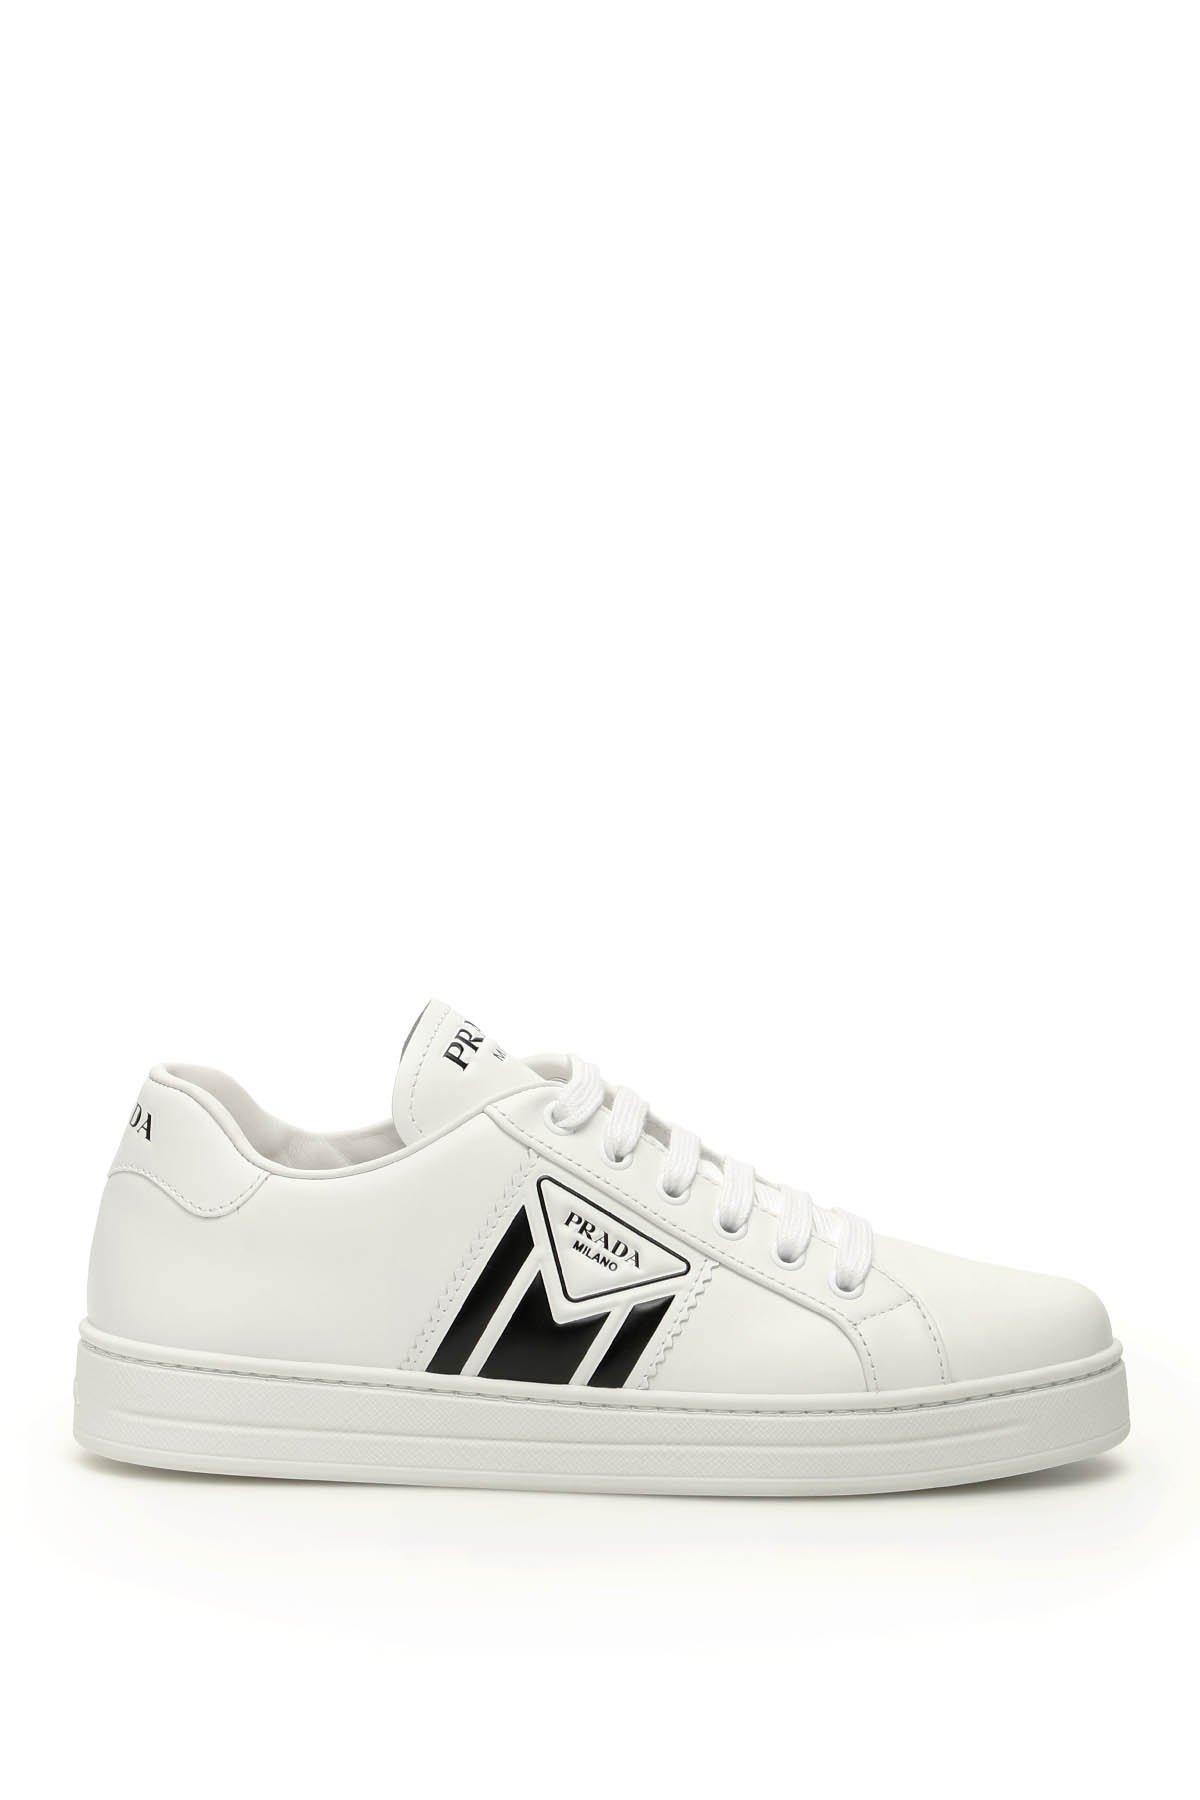 Prada Logo Stripe Leather Sneakers in White - Save 27% - Lyst